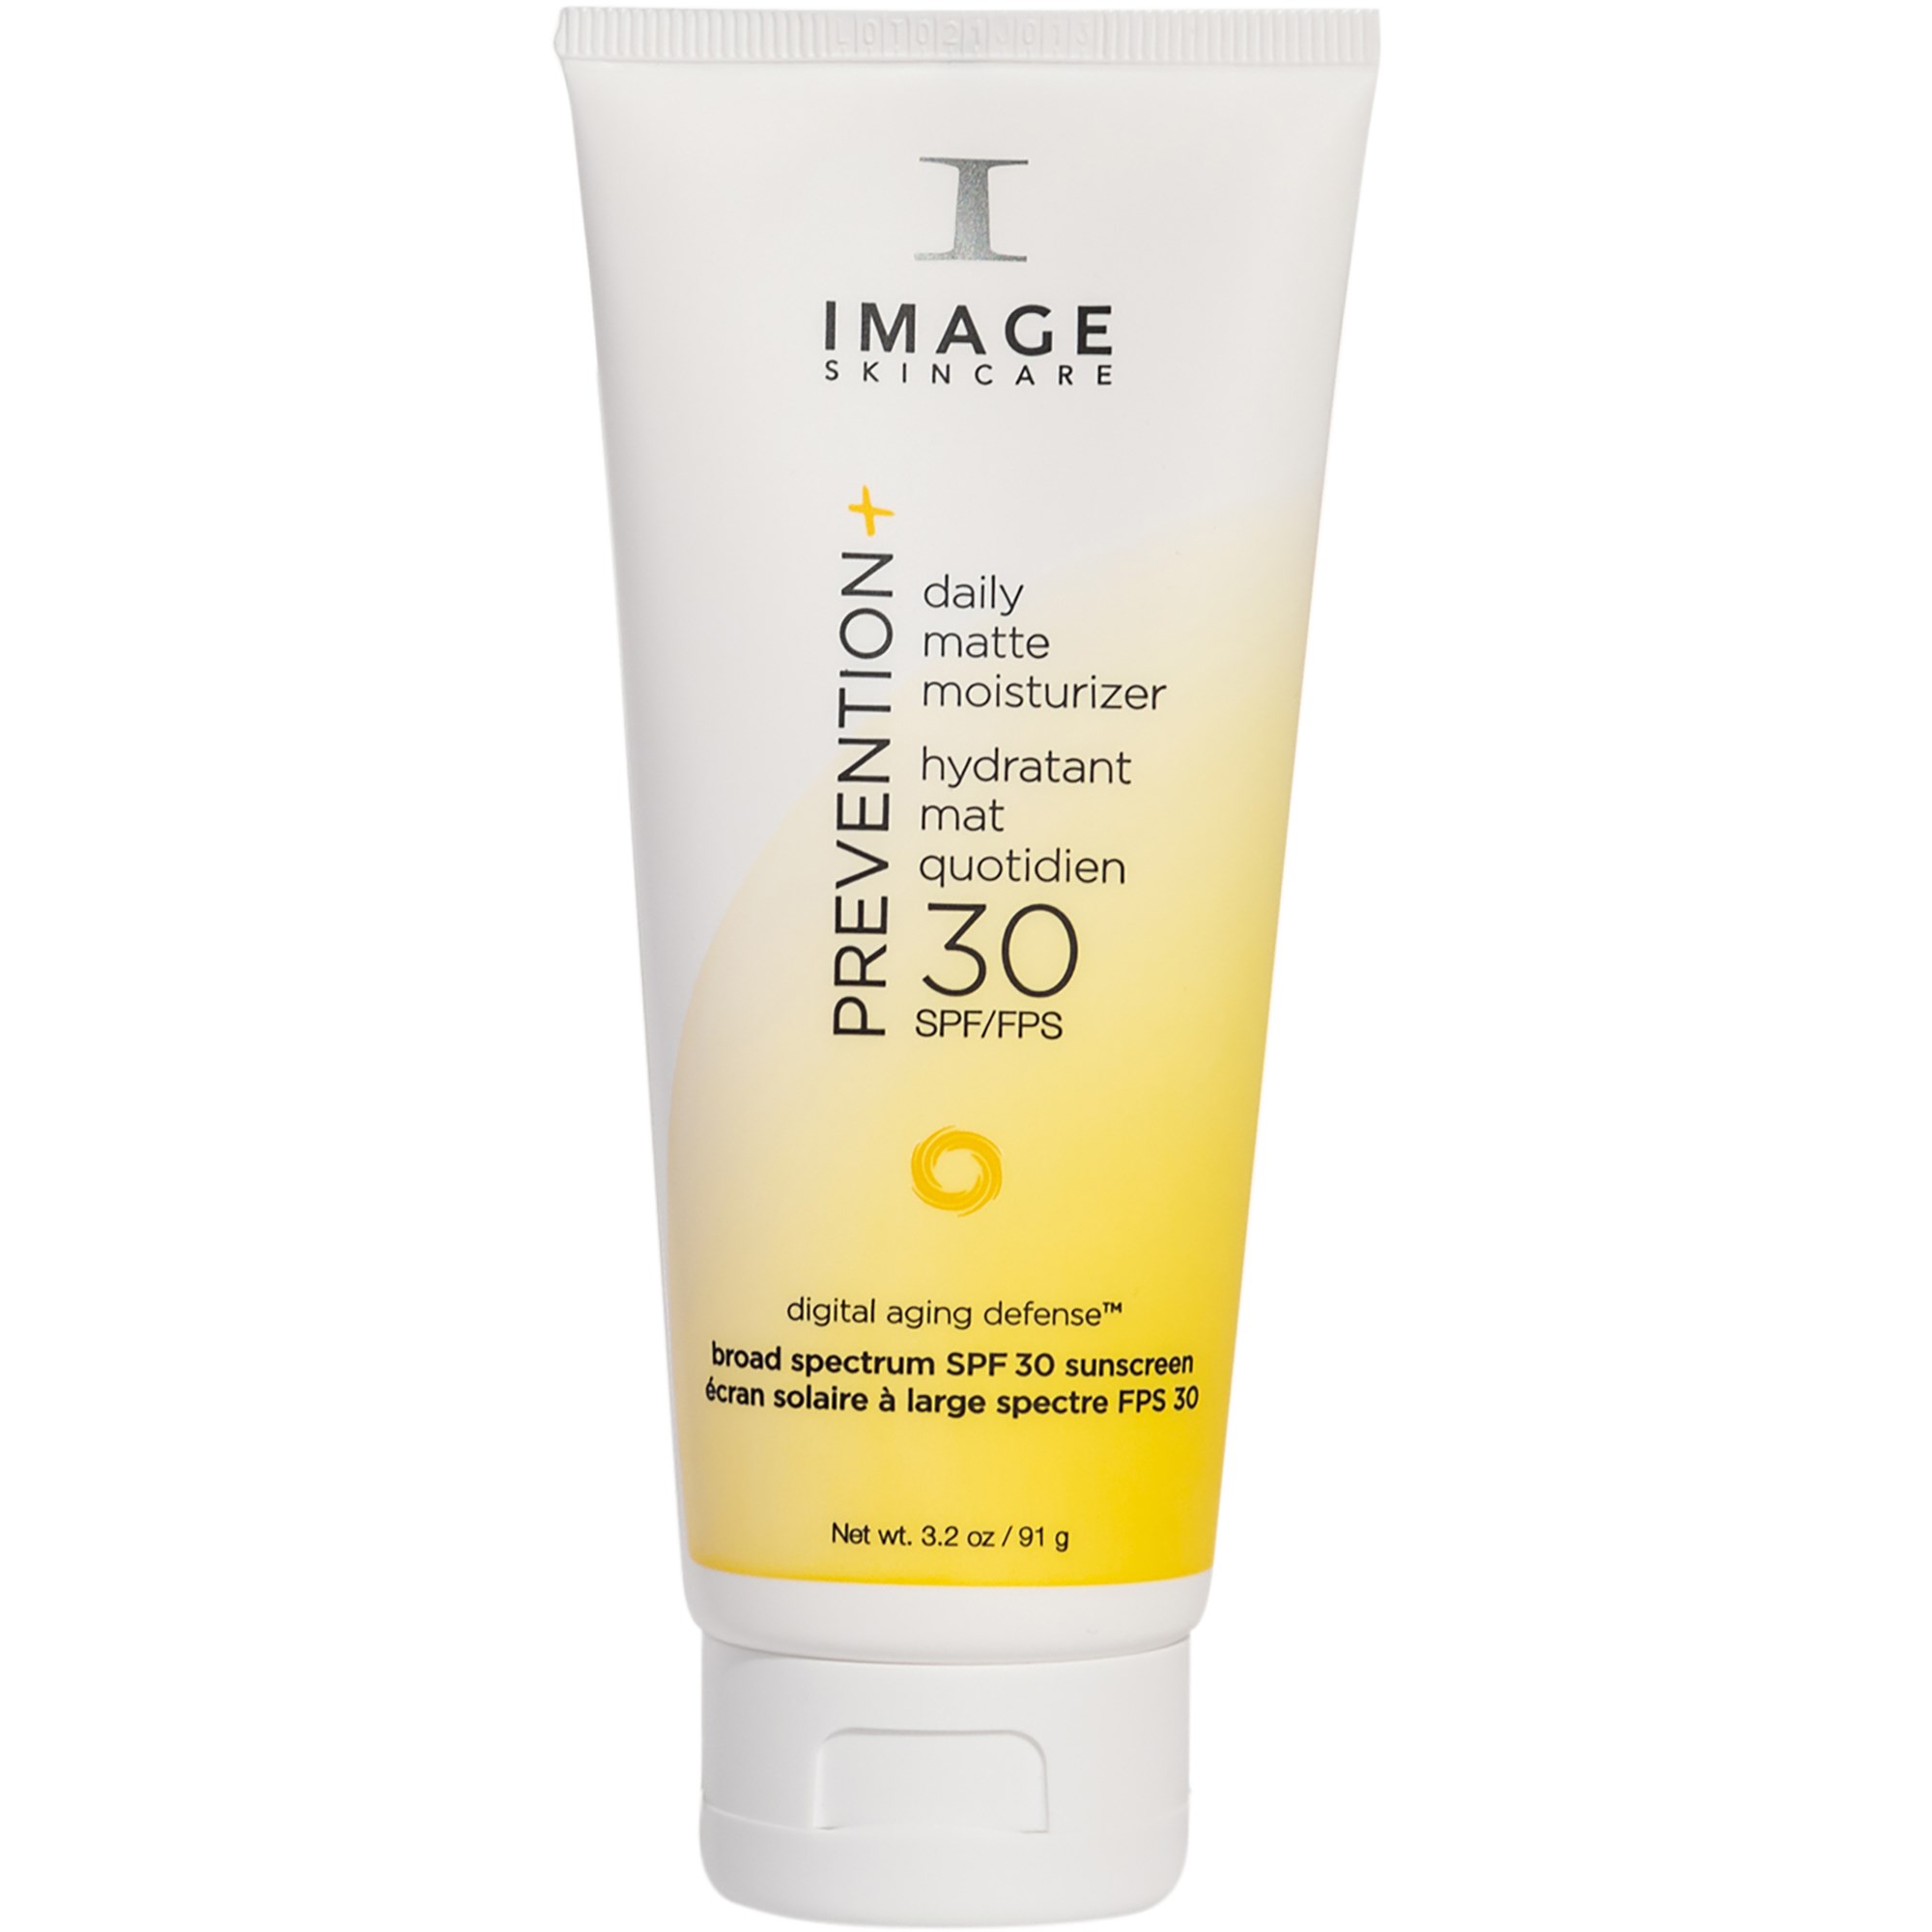 IMAGE Skincare Prevention+ Daily Matte Moisturizer SPF 30 91 g